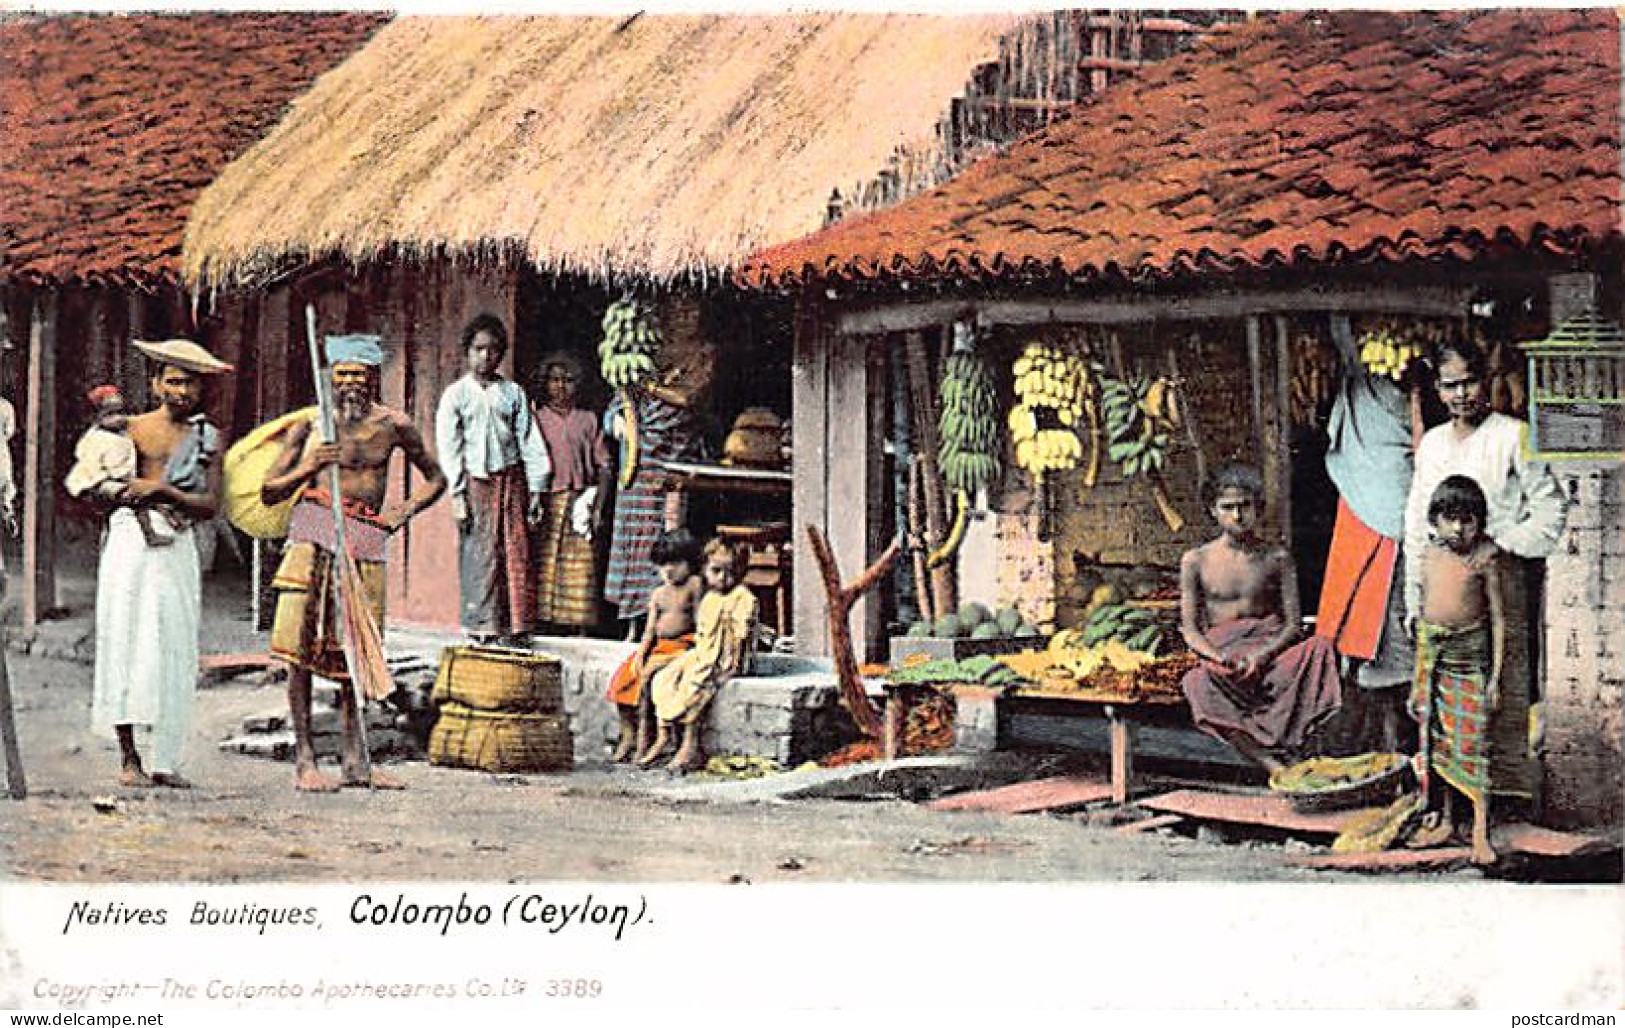 Sri Lanka - COLOMBO - Natives Boutiques - Publ. The Colombo Apothecaries Co. Ltd. 3389 - Sri Lanka (Ceylon)